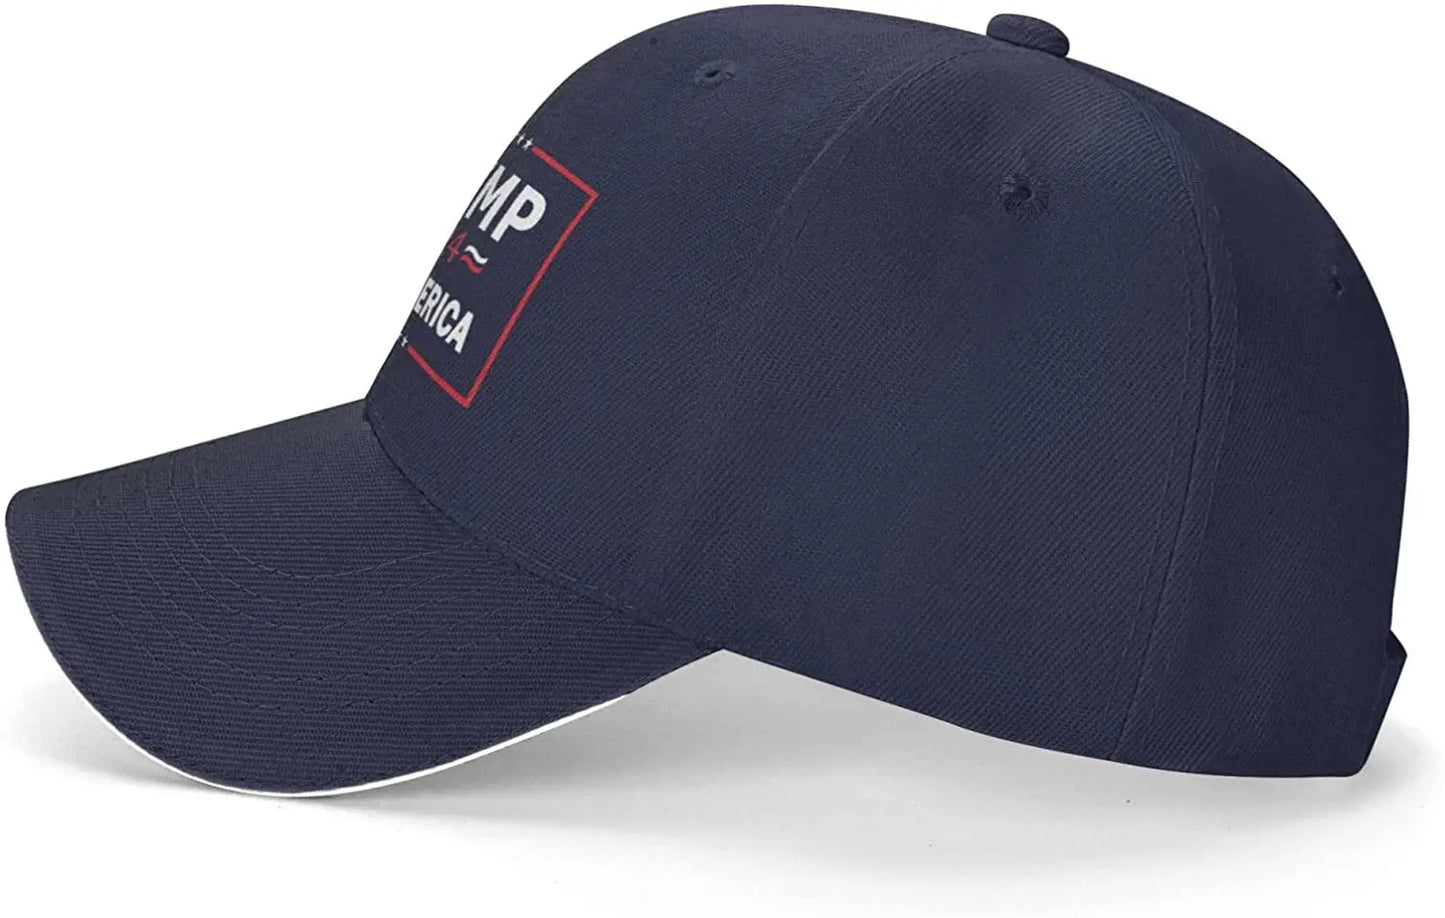 Trump Save America Again 2024 Baseball Cap Unisex Dad Hat Trucker Hat Ball Caps Men Women Outdoor Sun Hat Hiking Hat Multi Color